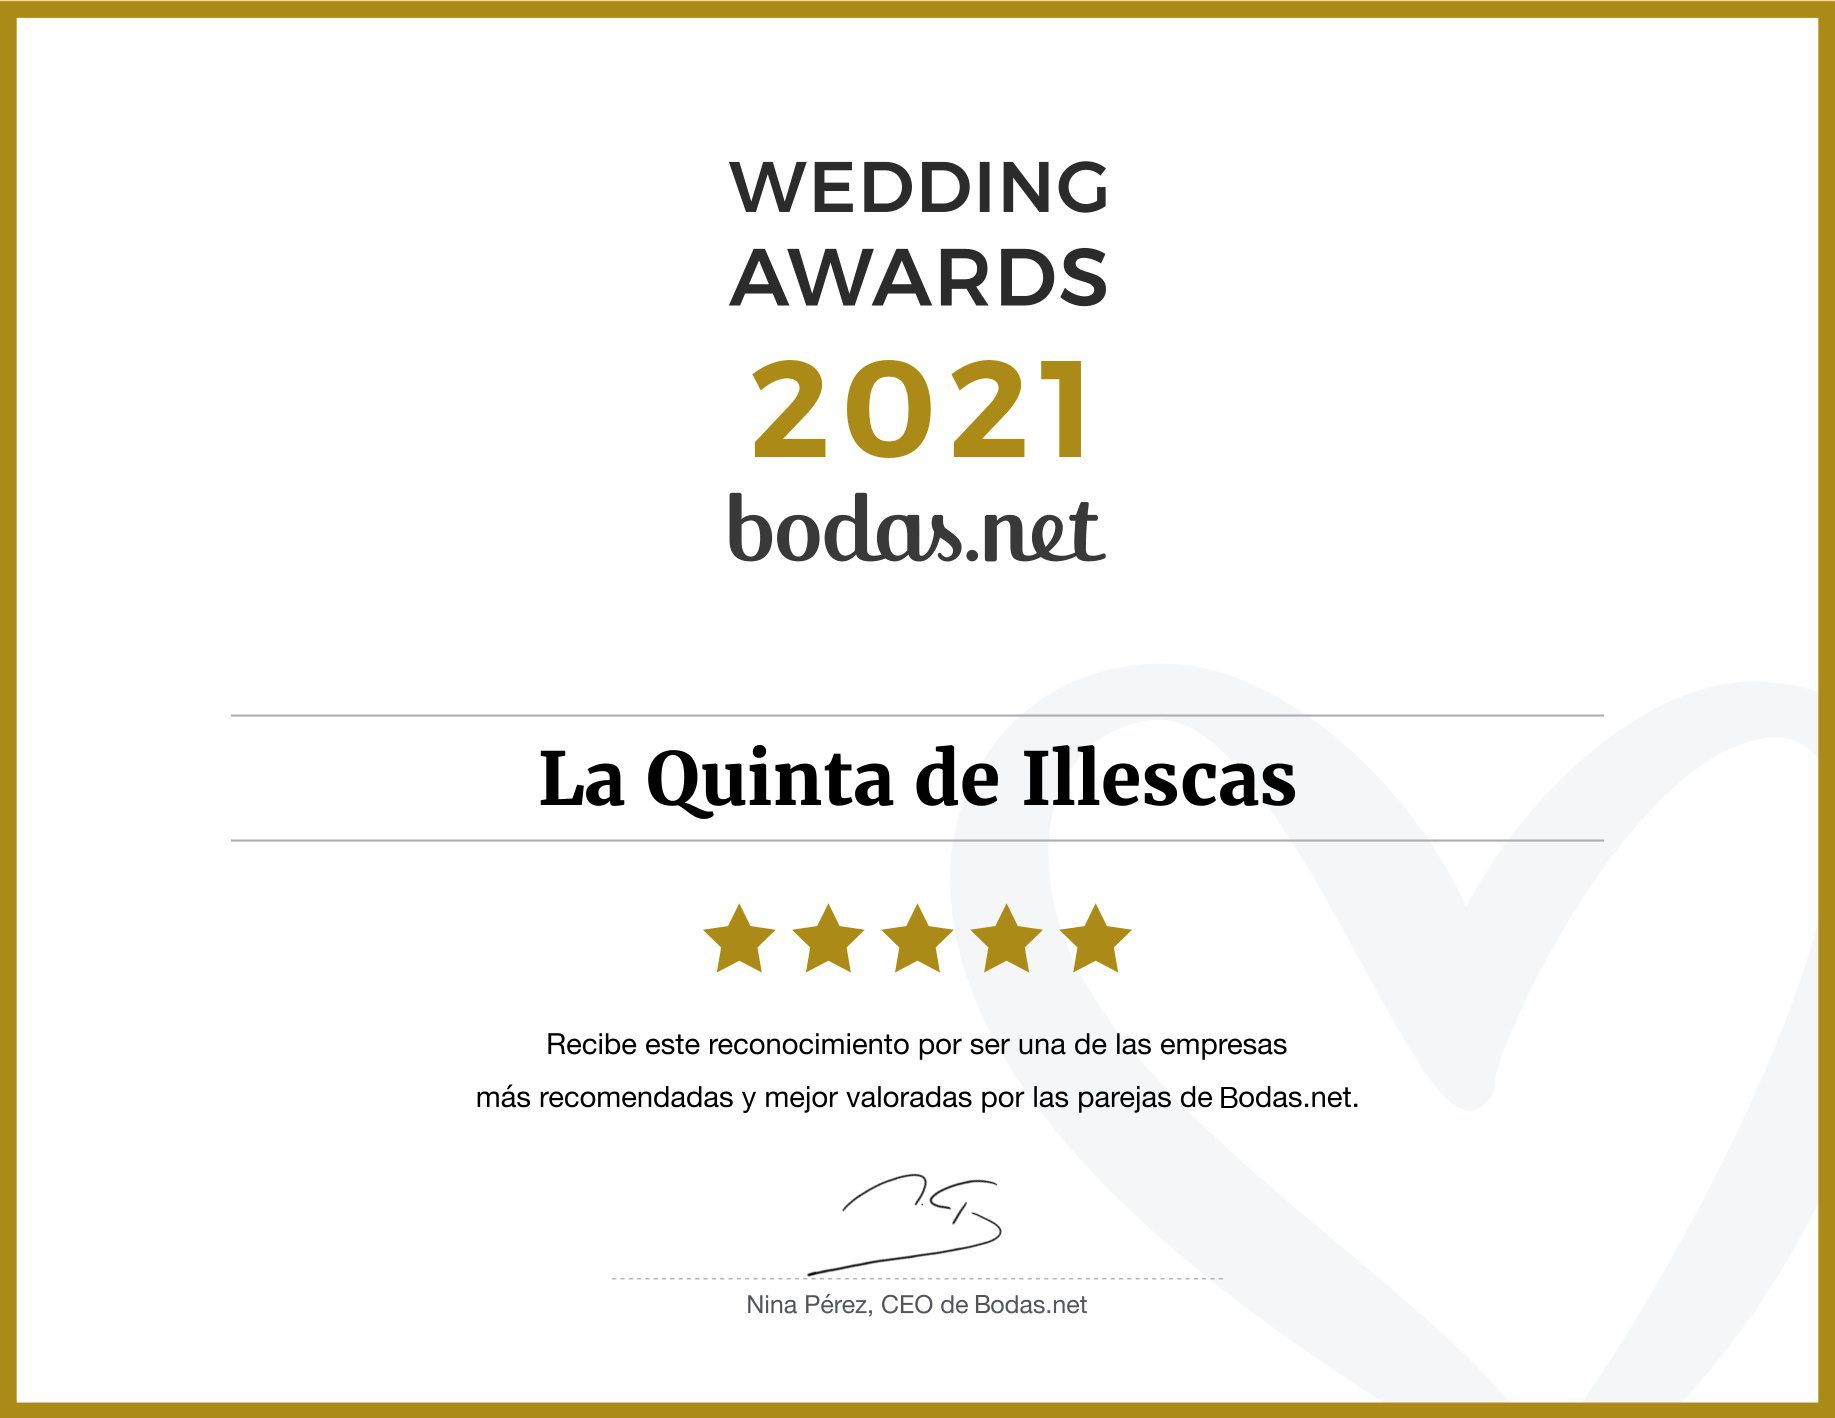 Wedding Awards 2021 bodas.net La Quinta de Illescas